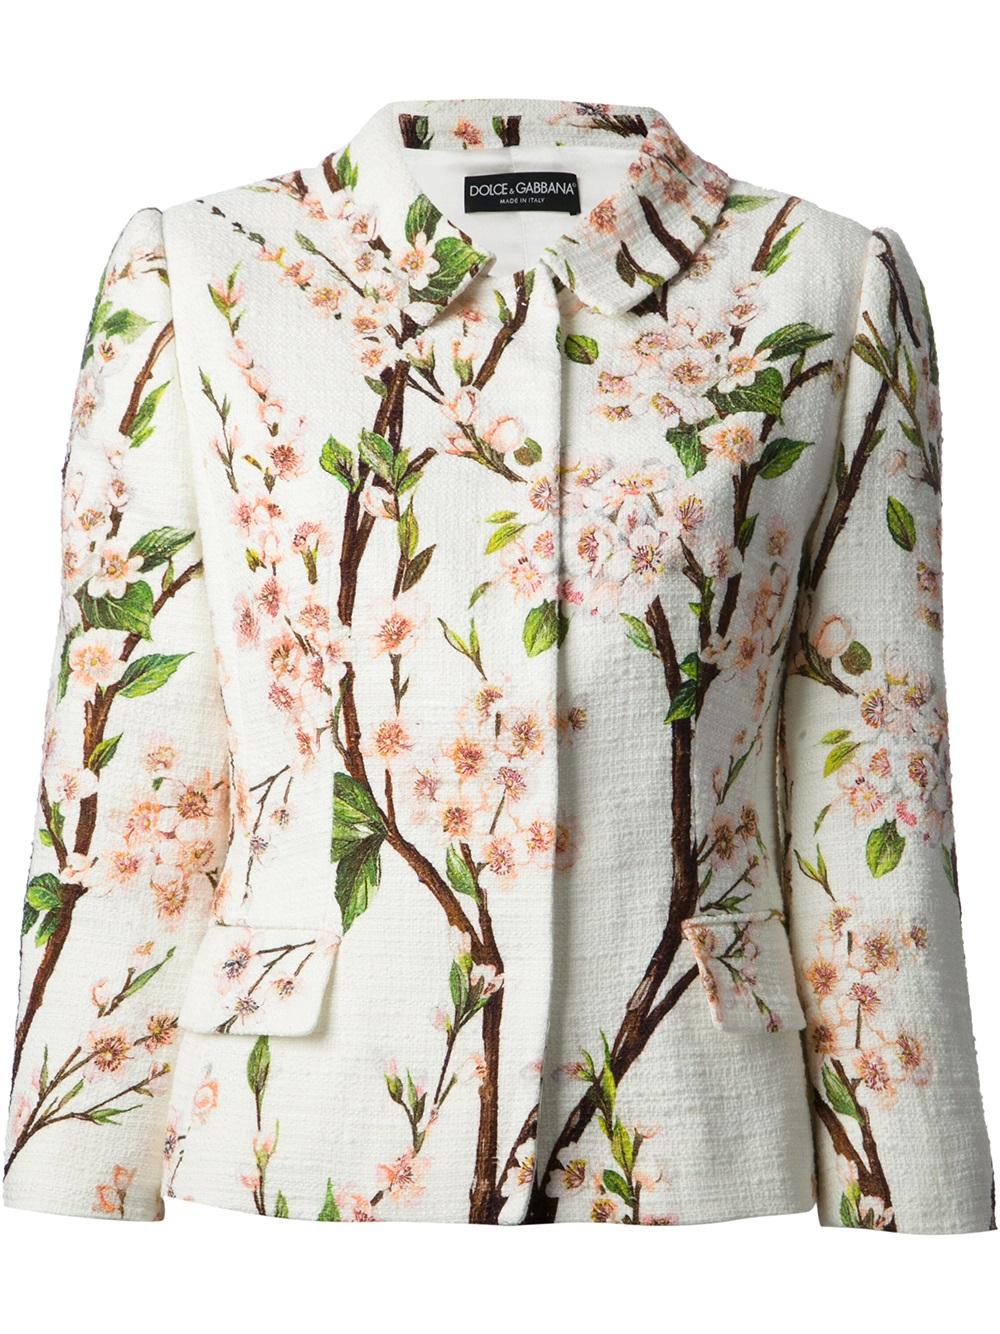 Dolce & gabbana Cherry Blossom Print Shirt in White | Lyst